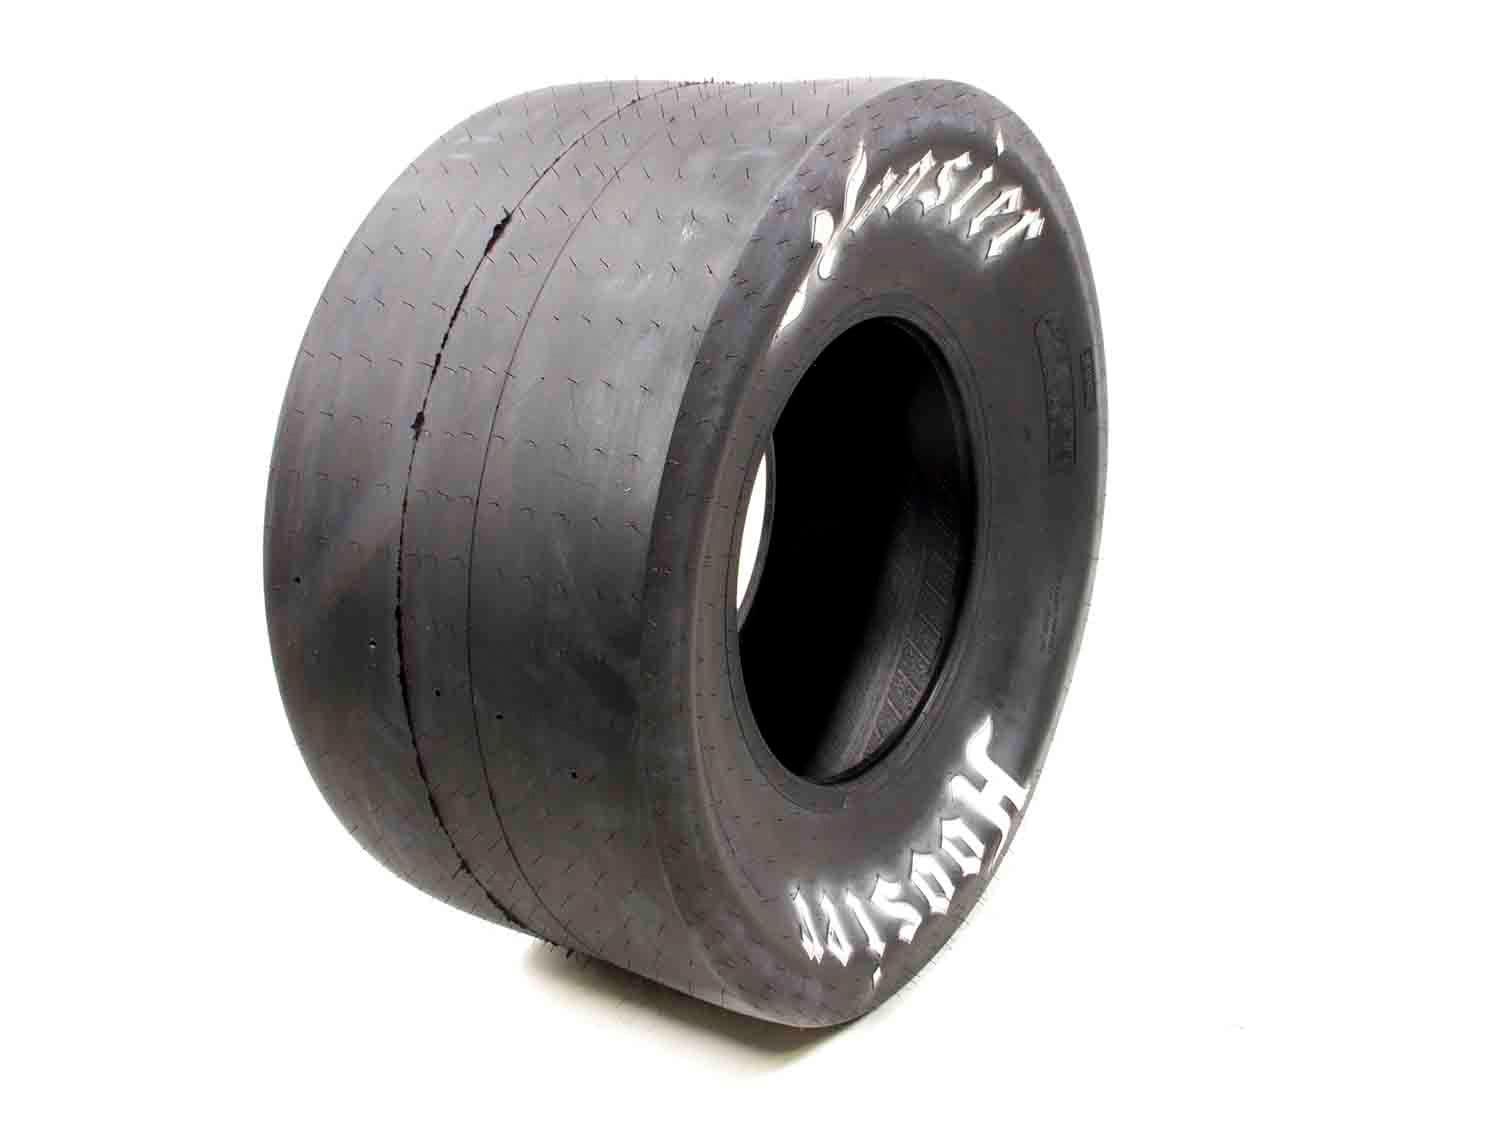 28.0/10-15 Drag Tire - Burlile Performance Products